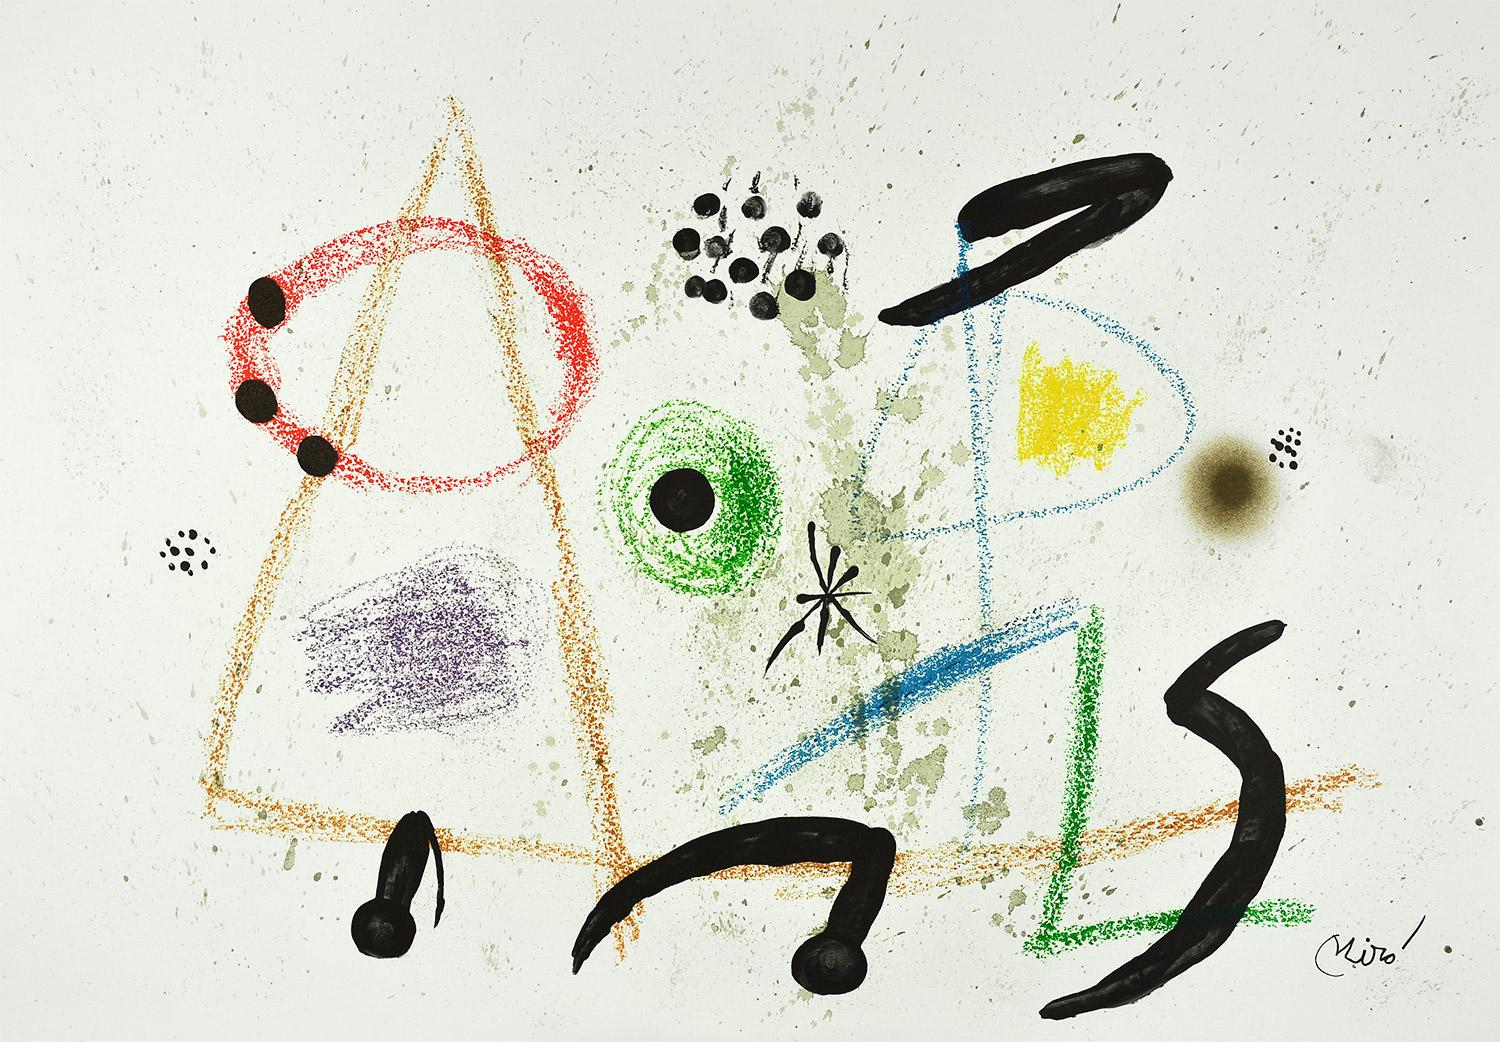 Abstract Print Joan Miró - MARAvilLAS CON VARIACIONES... Lithographie - Art contemporain - Abstraction - Noir - Rouge